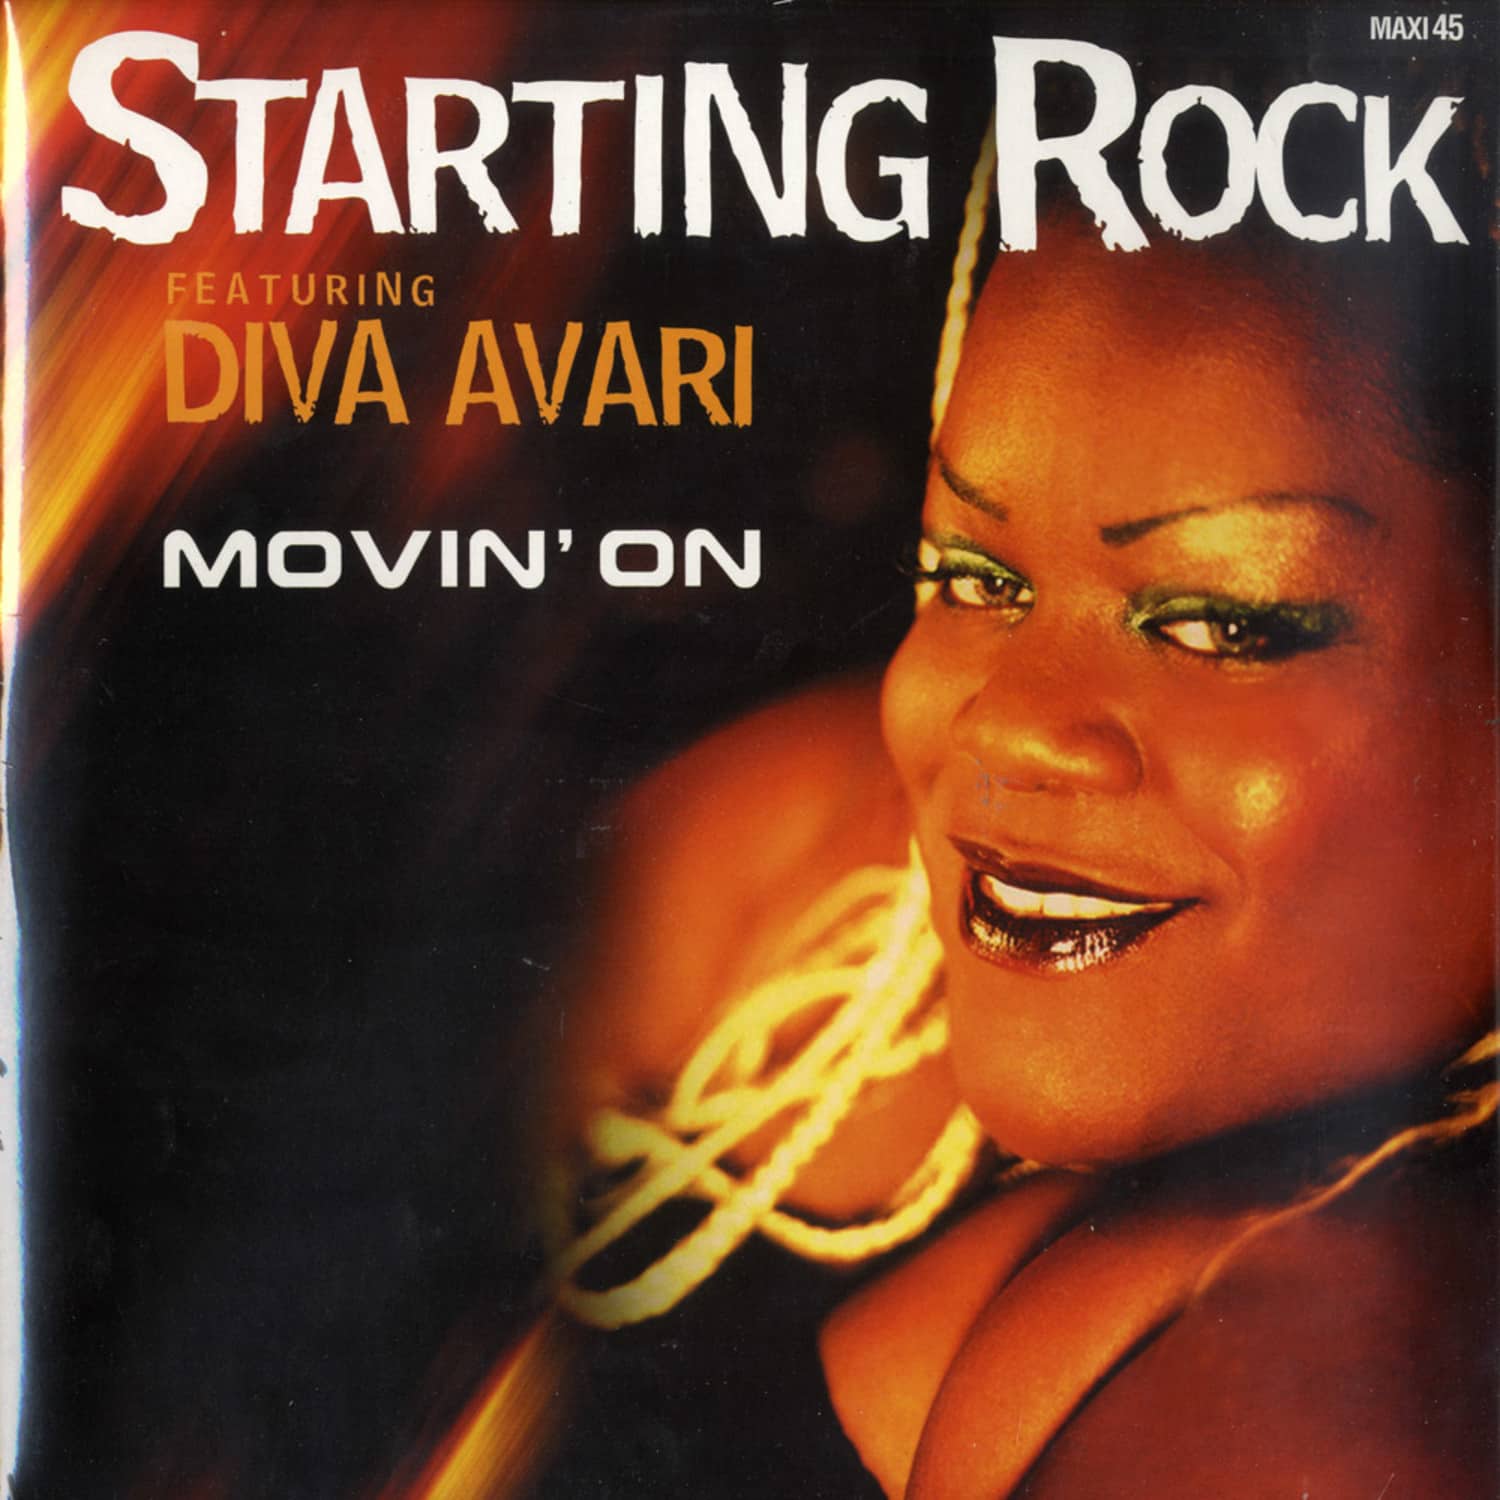 Starting Rock feat. Diva Avari - MOVING ON